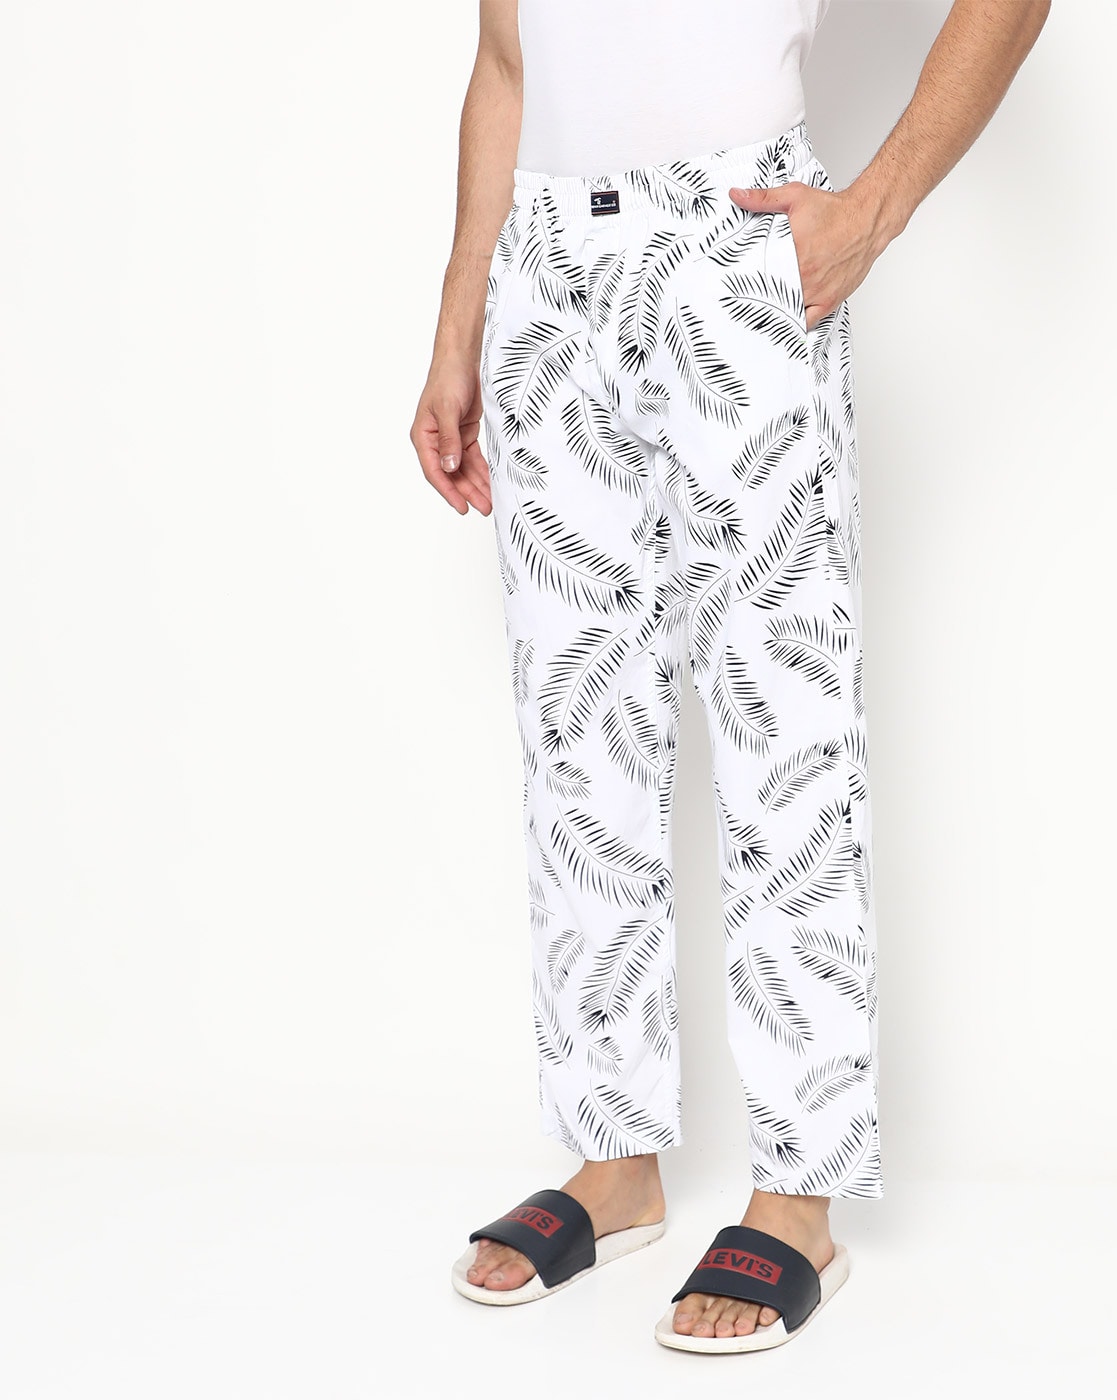 Stylish Cotton Printed Comfort Fit Lounge Pants For Men- 2 Pieces